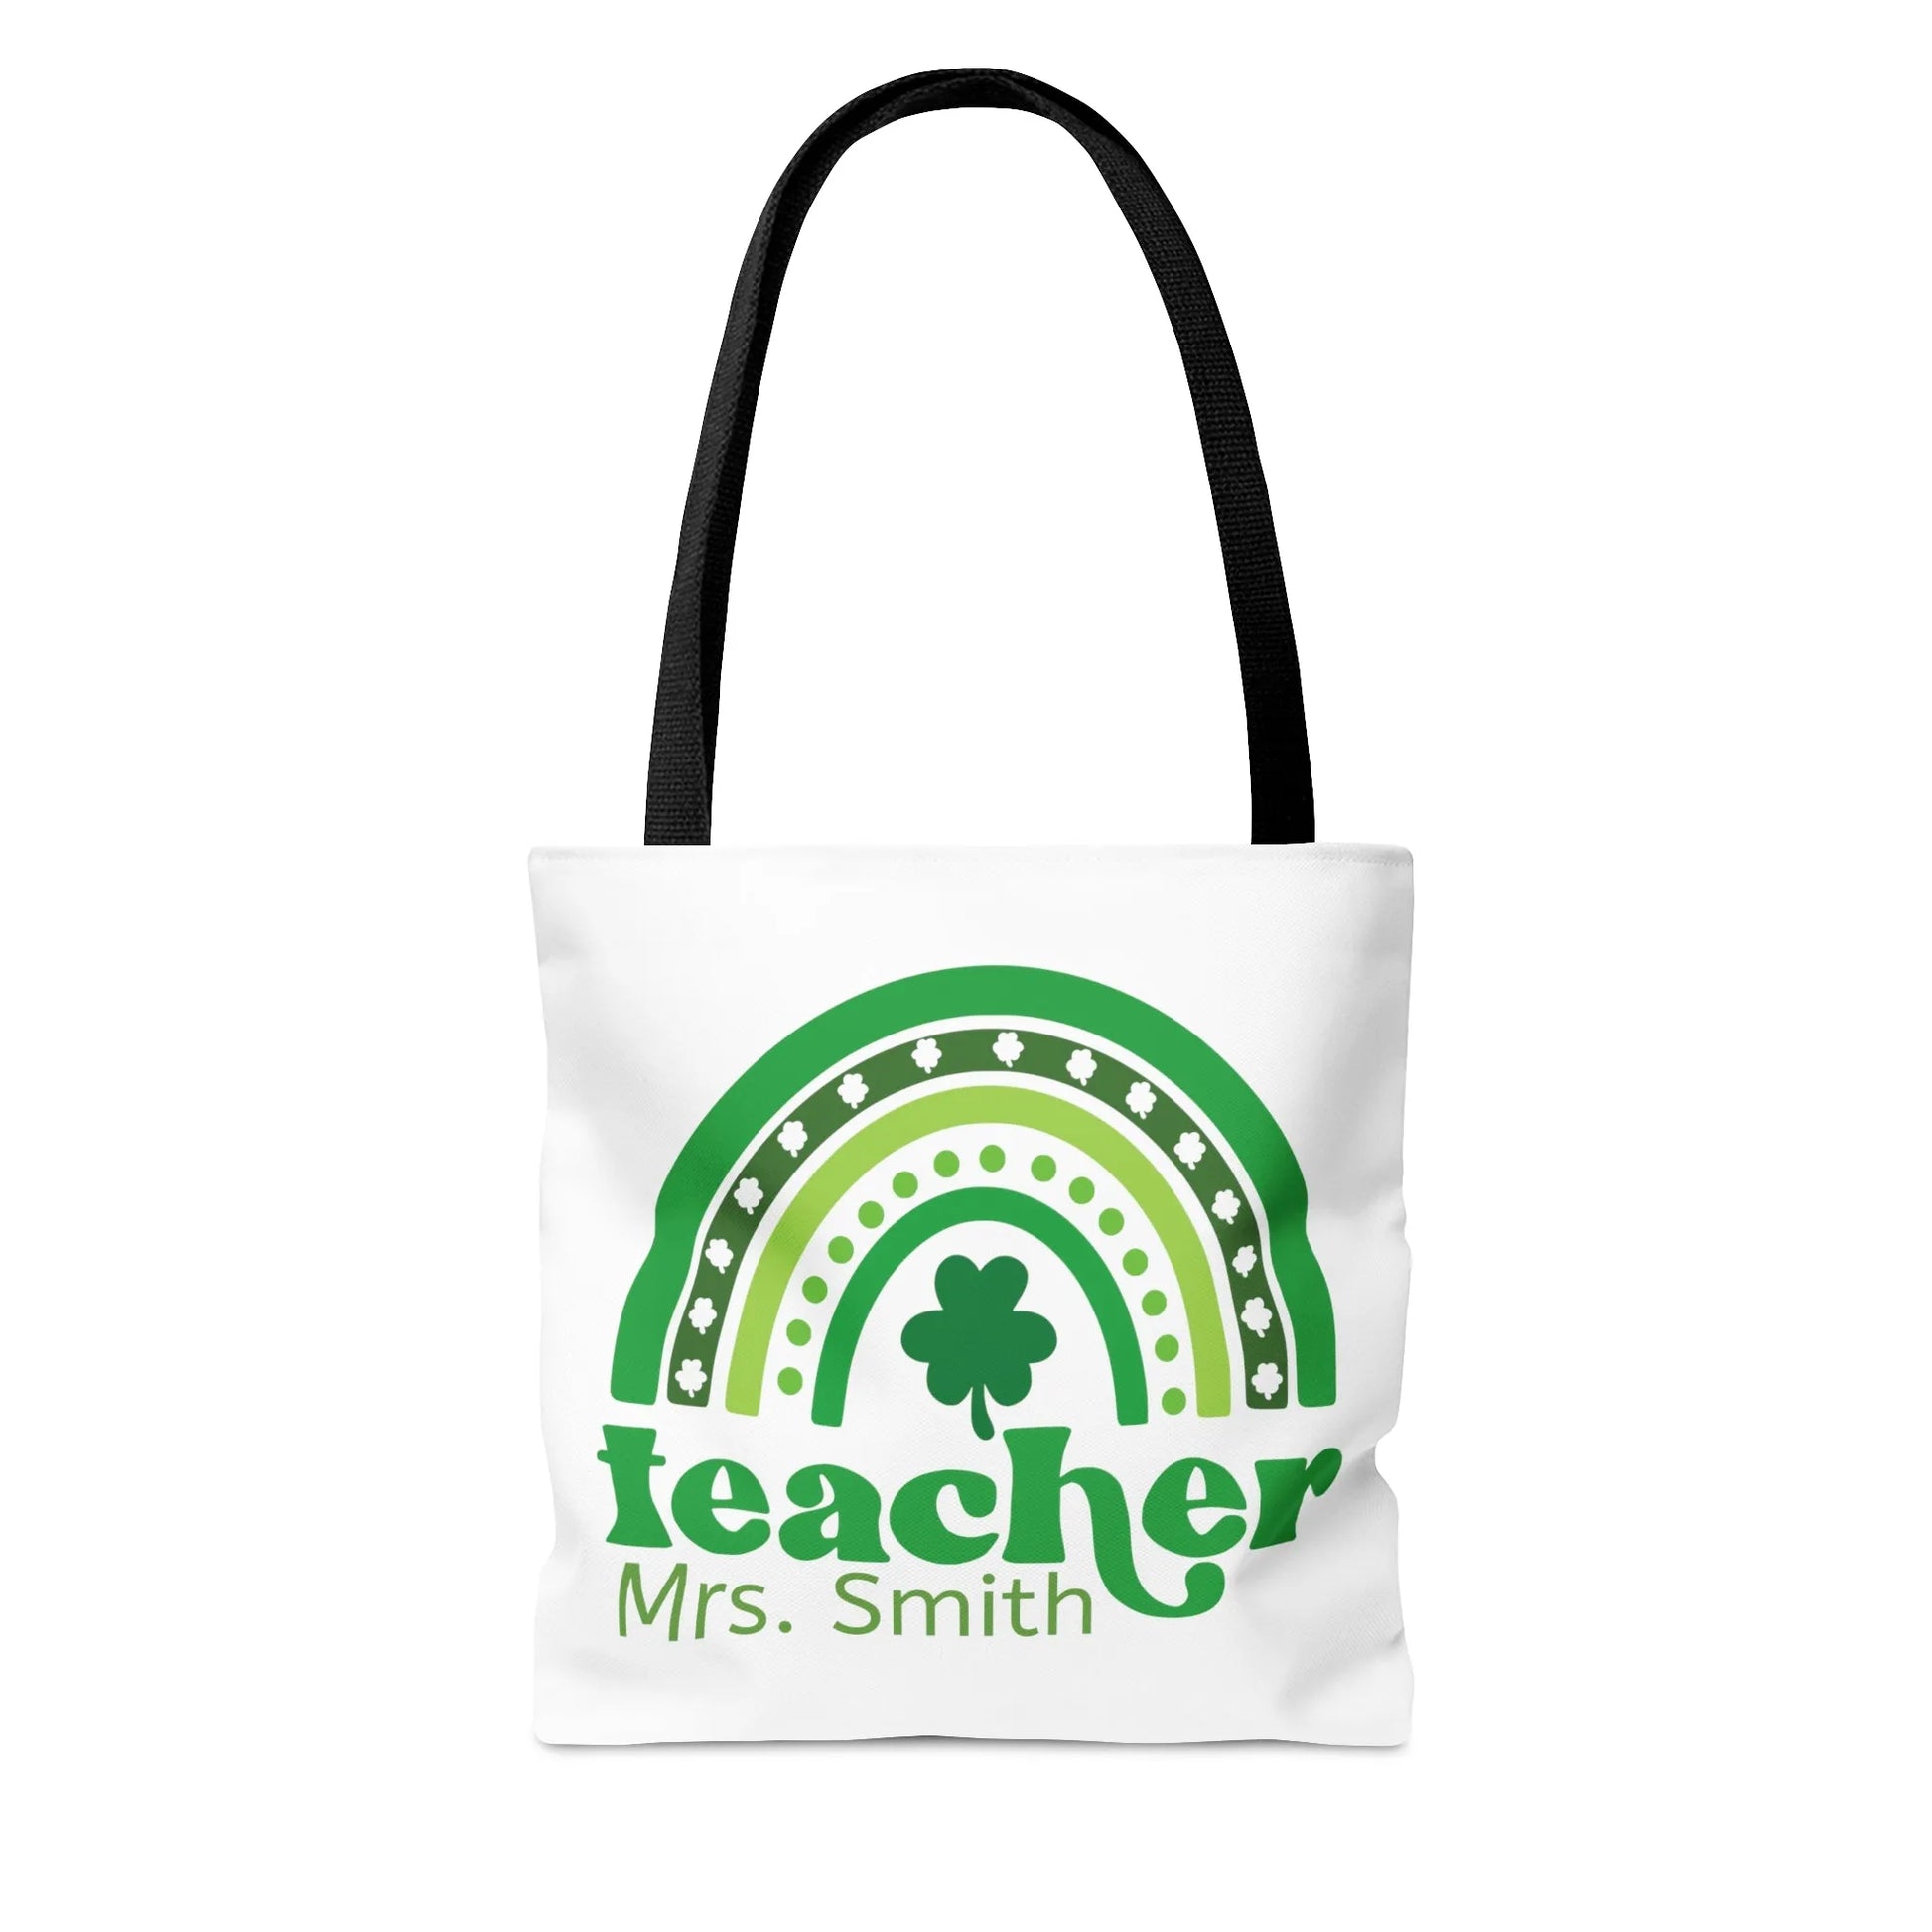 St. Patrick's Day Teacher Tote Bag - Teacher Tote Bag - St. Patrick's Day Tote Bag